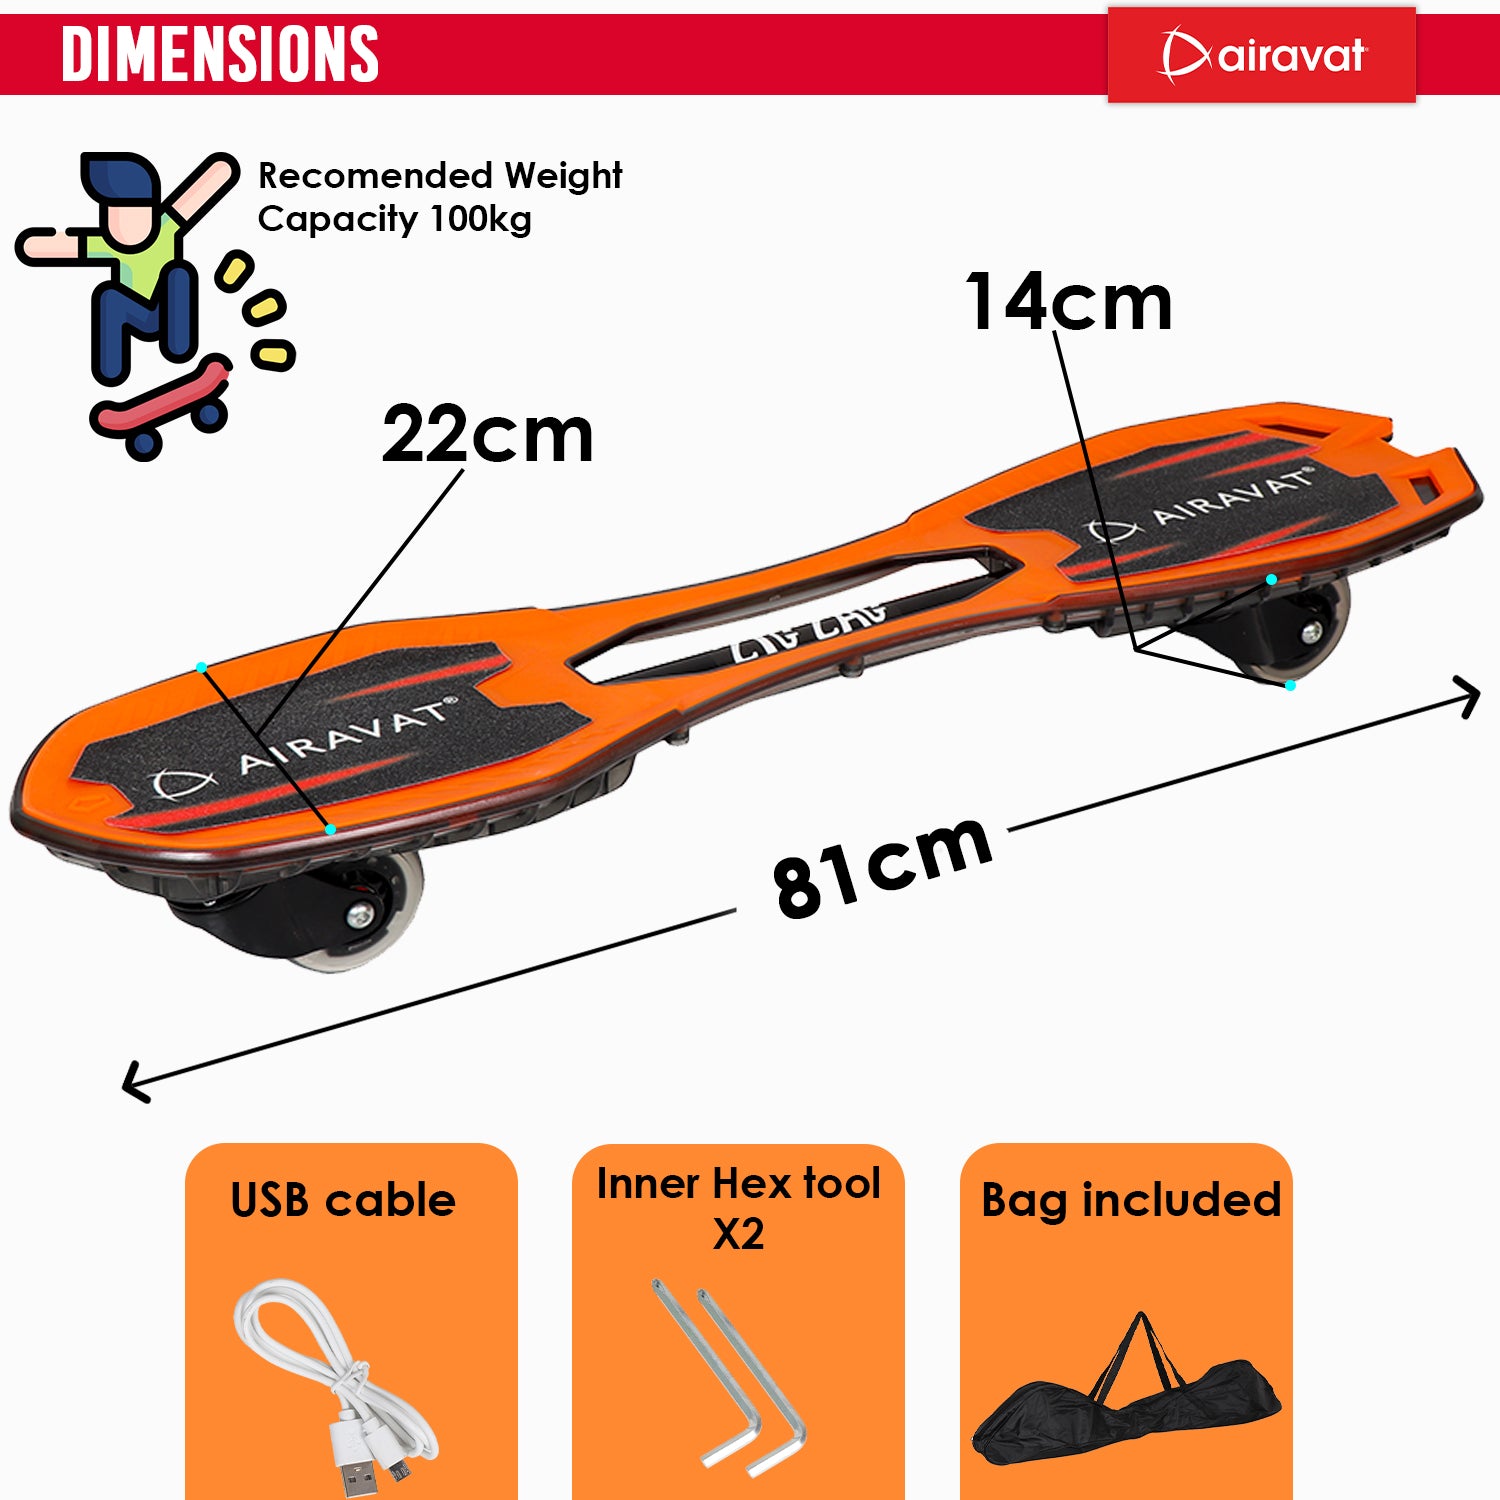 7803-dimensions-of-zig-zag-waveboard-orange